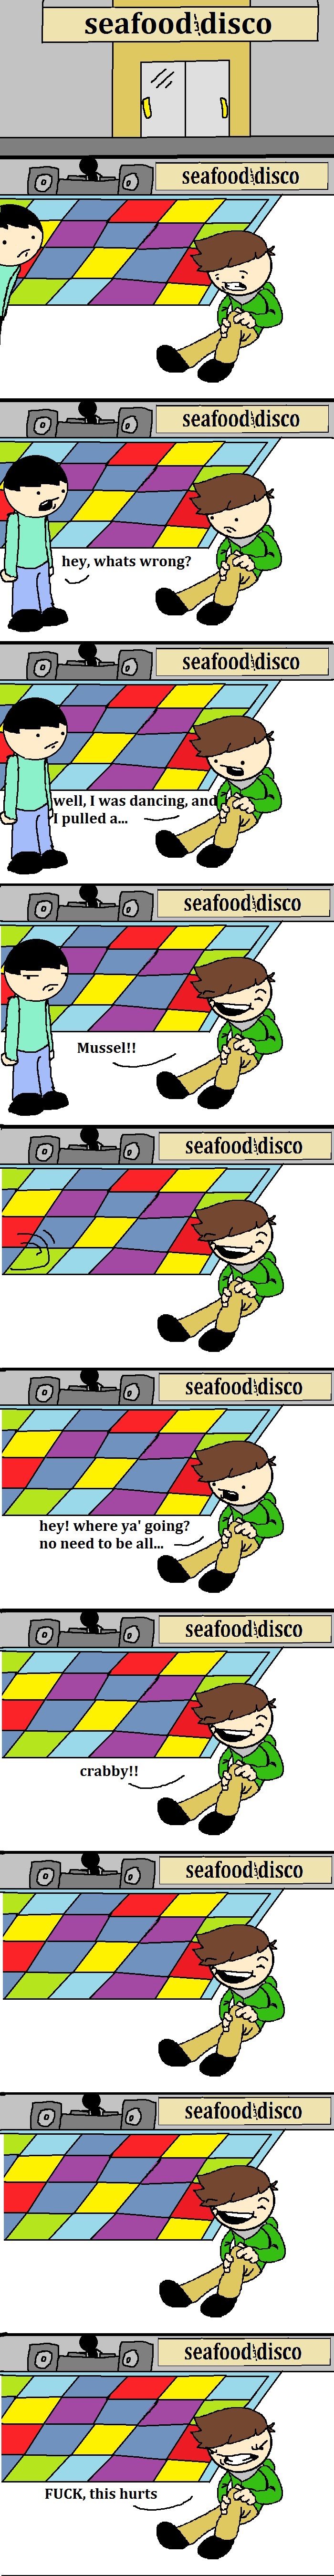 somethin' fishy. this took me a very long time to make, hope you guys like!. seafood‘ a. disco